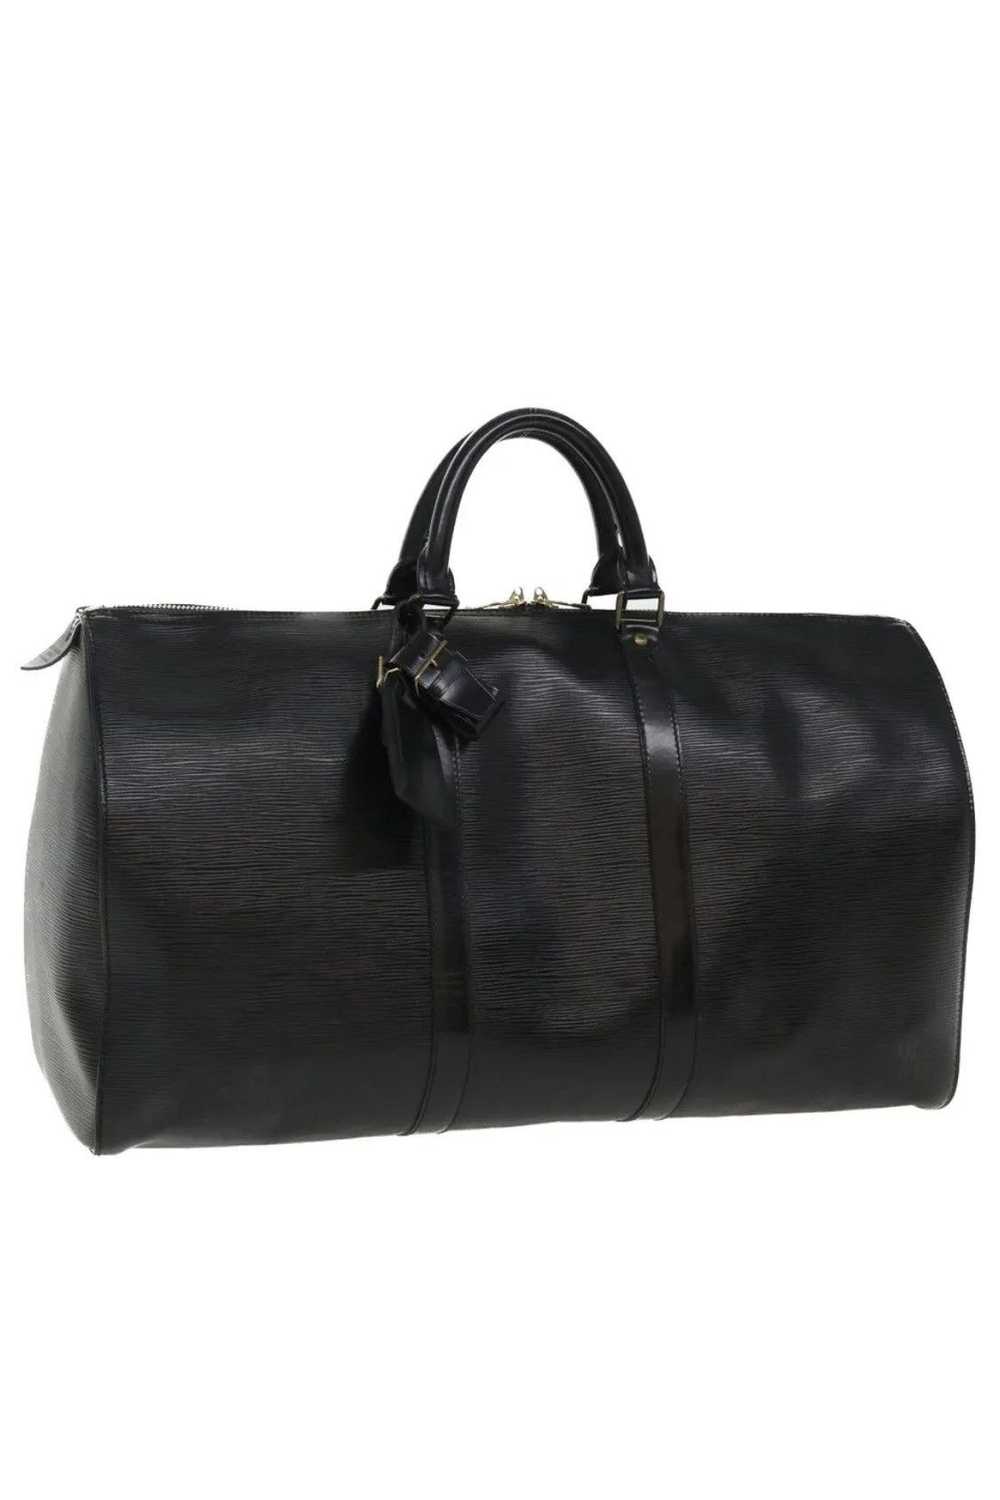 Louis Vuitton Keepall 50 Epi Duffle Bag - image 1